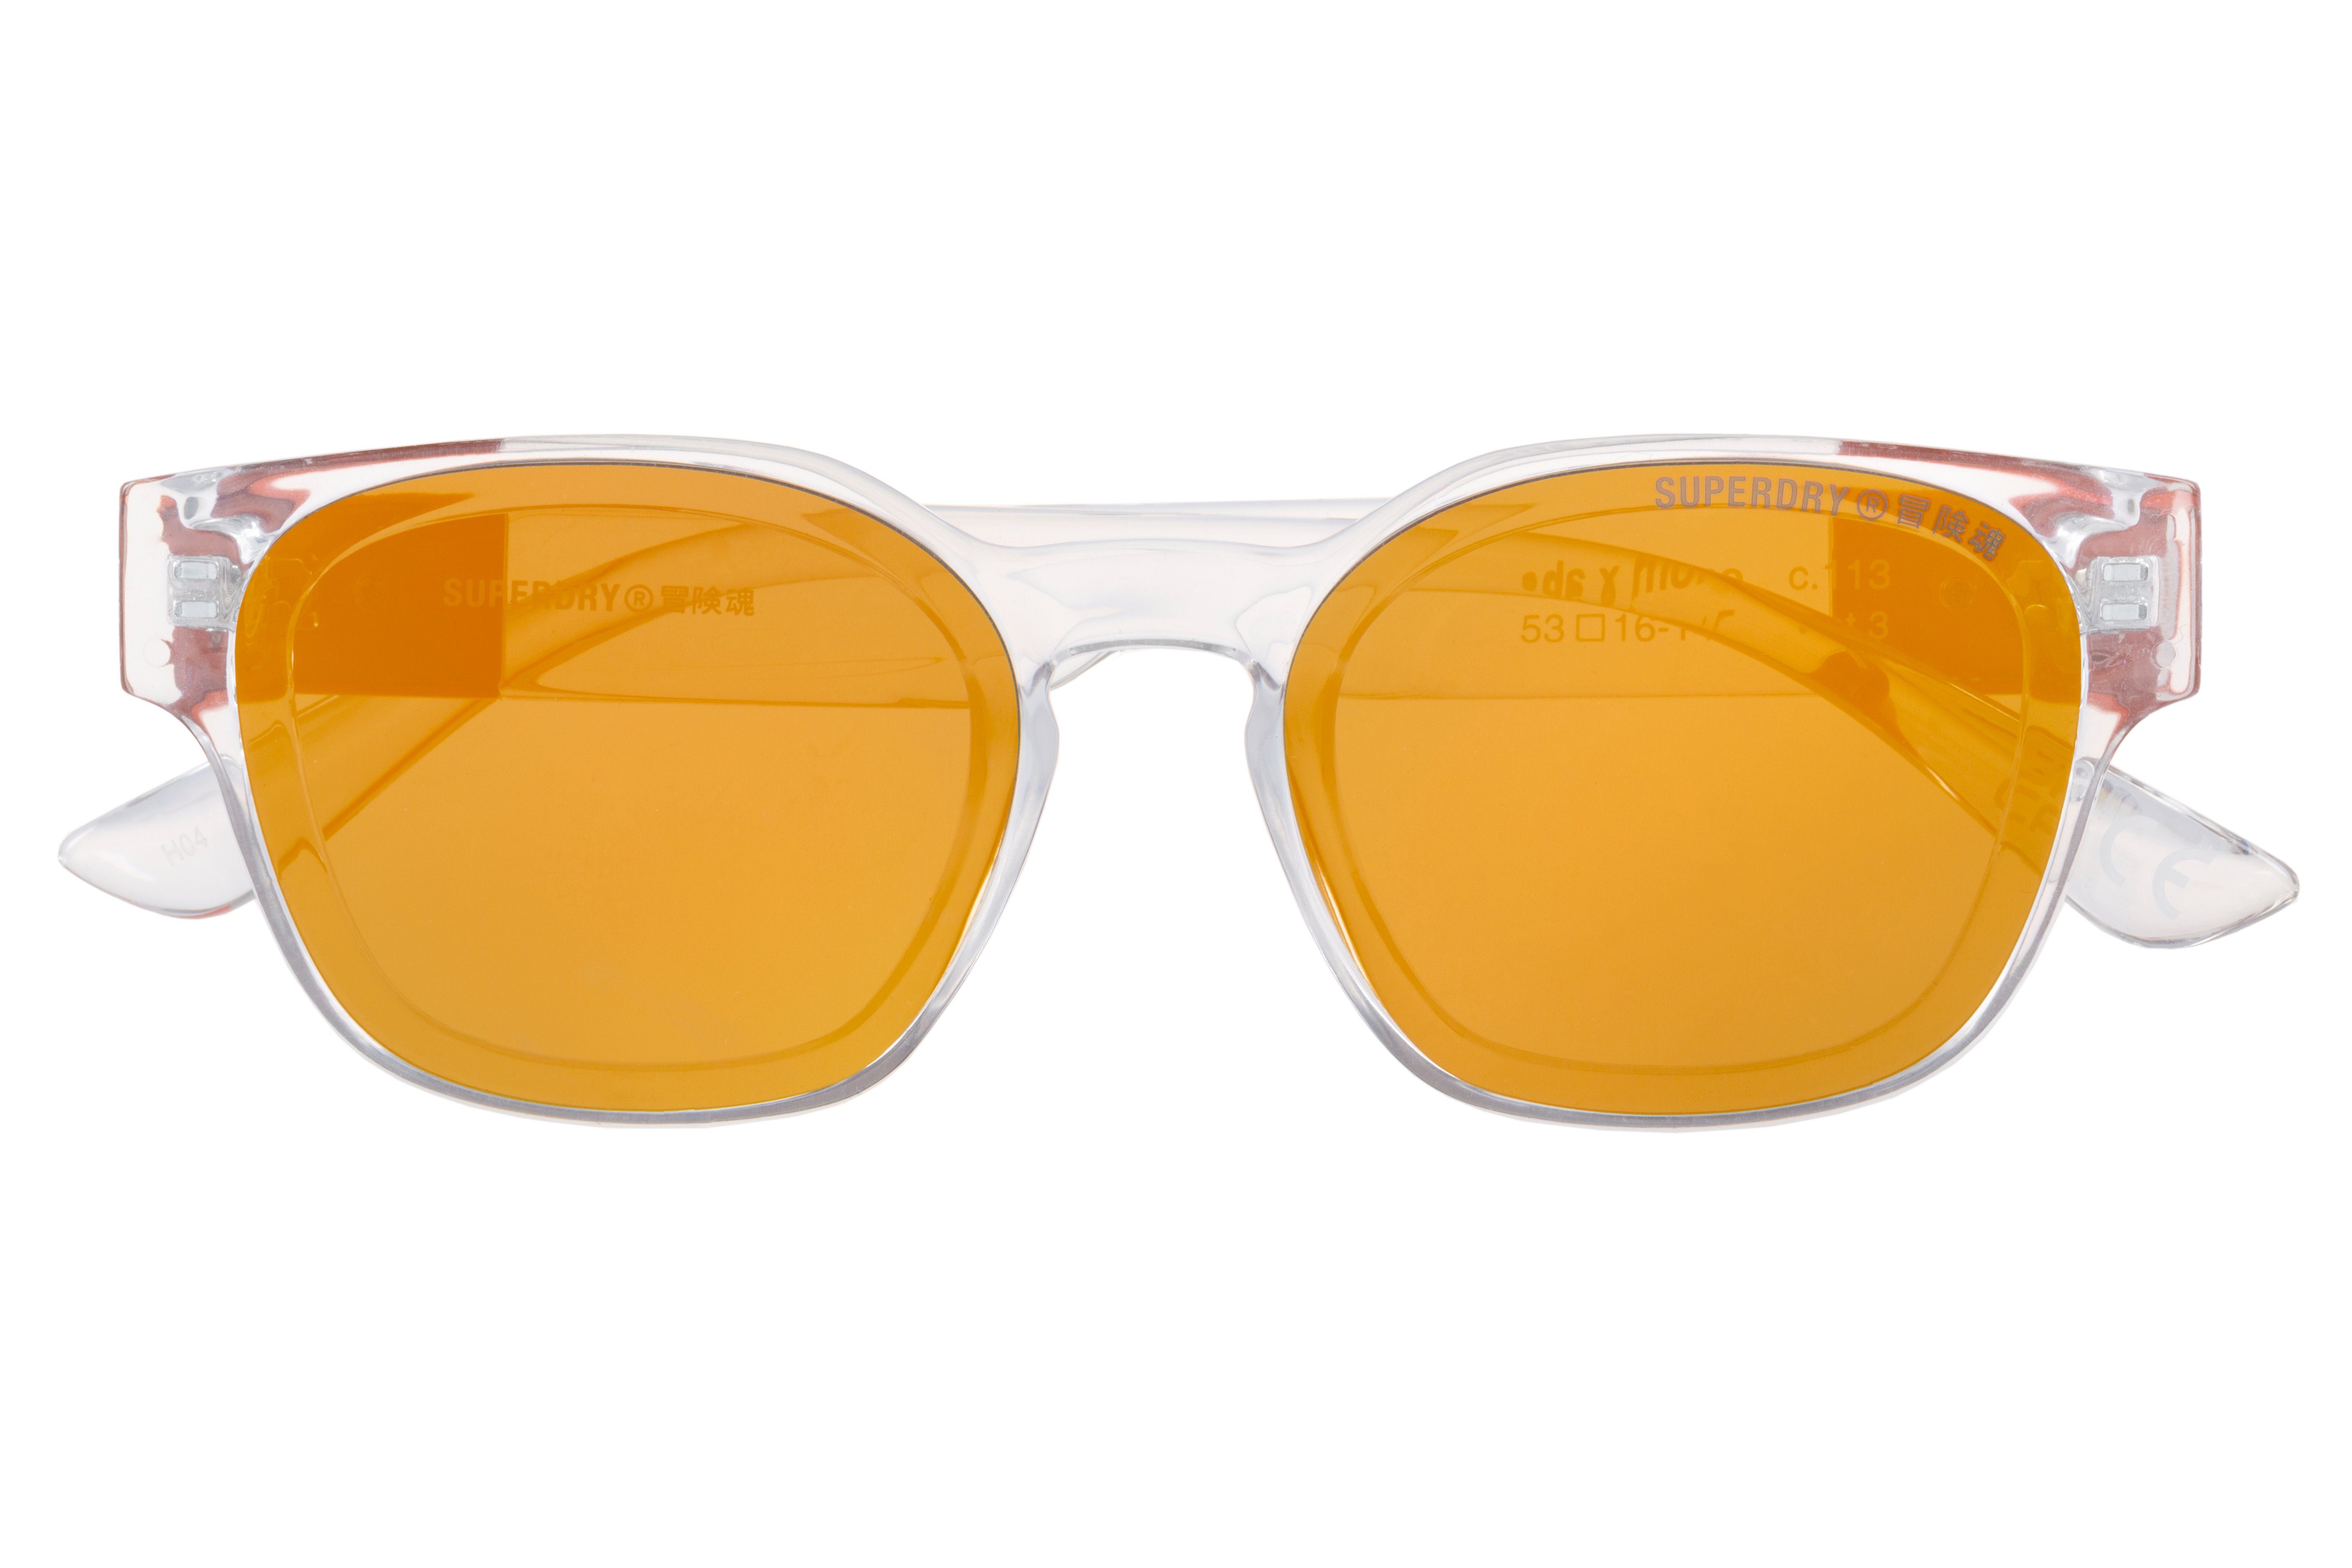 Herren Brillen Superdry Sonnenbrille Xmono 113 Kunststoff, Kategorie 3, 53-16/145